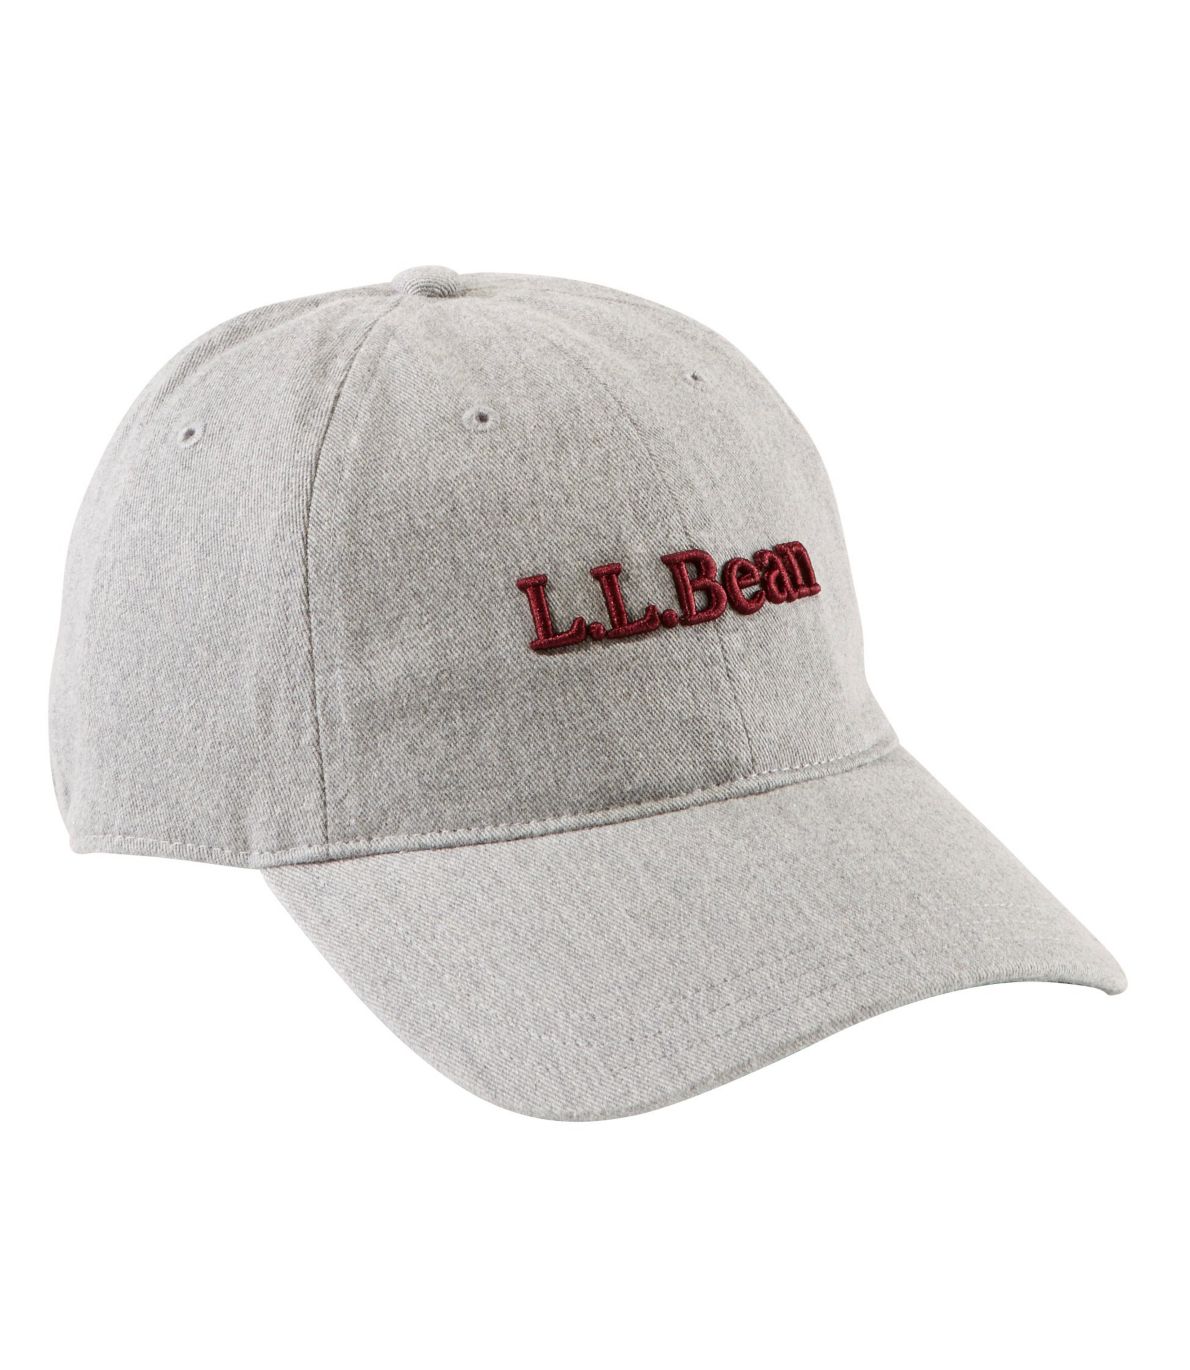 Adults' Cotton Baseball Hat, Katahdin Logo